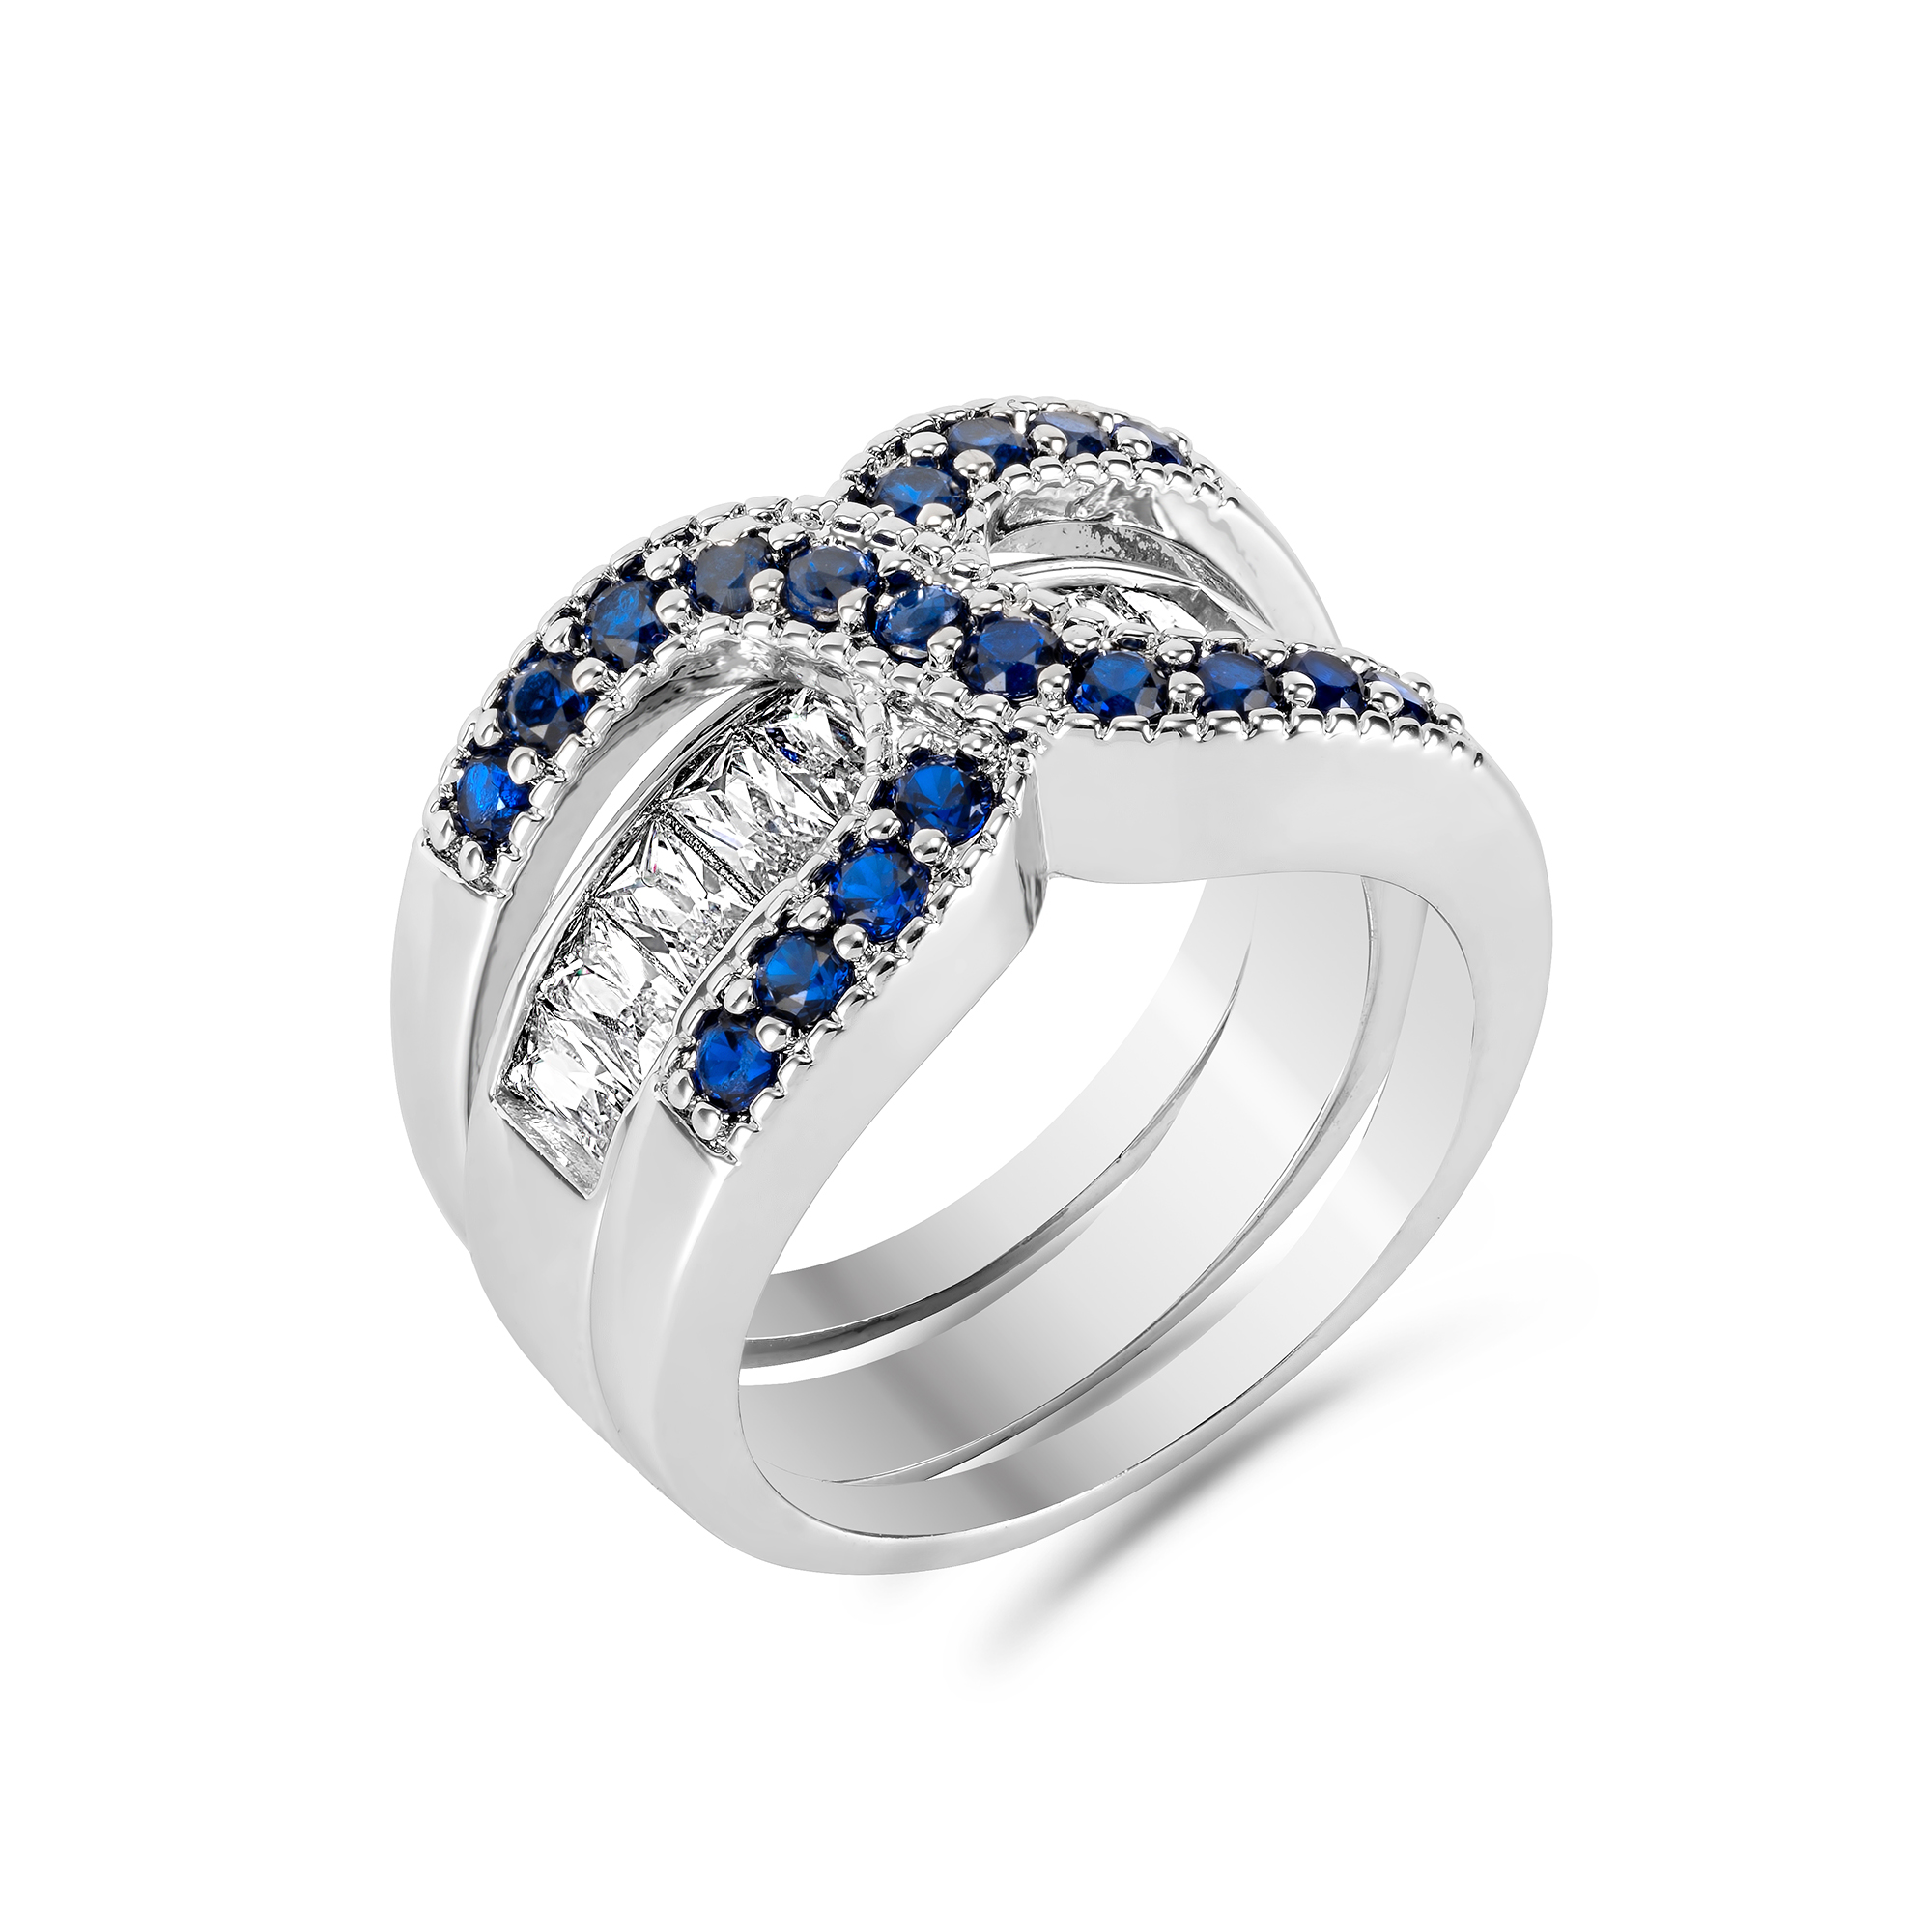 40pc Double Ring Set Blue Cubic Zirconia Infinity Ring Set 3 Sizes plus 40 free organza bag l UK SELLER l GCJ038